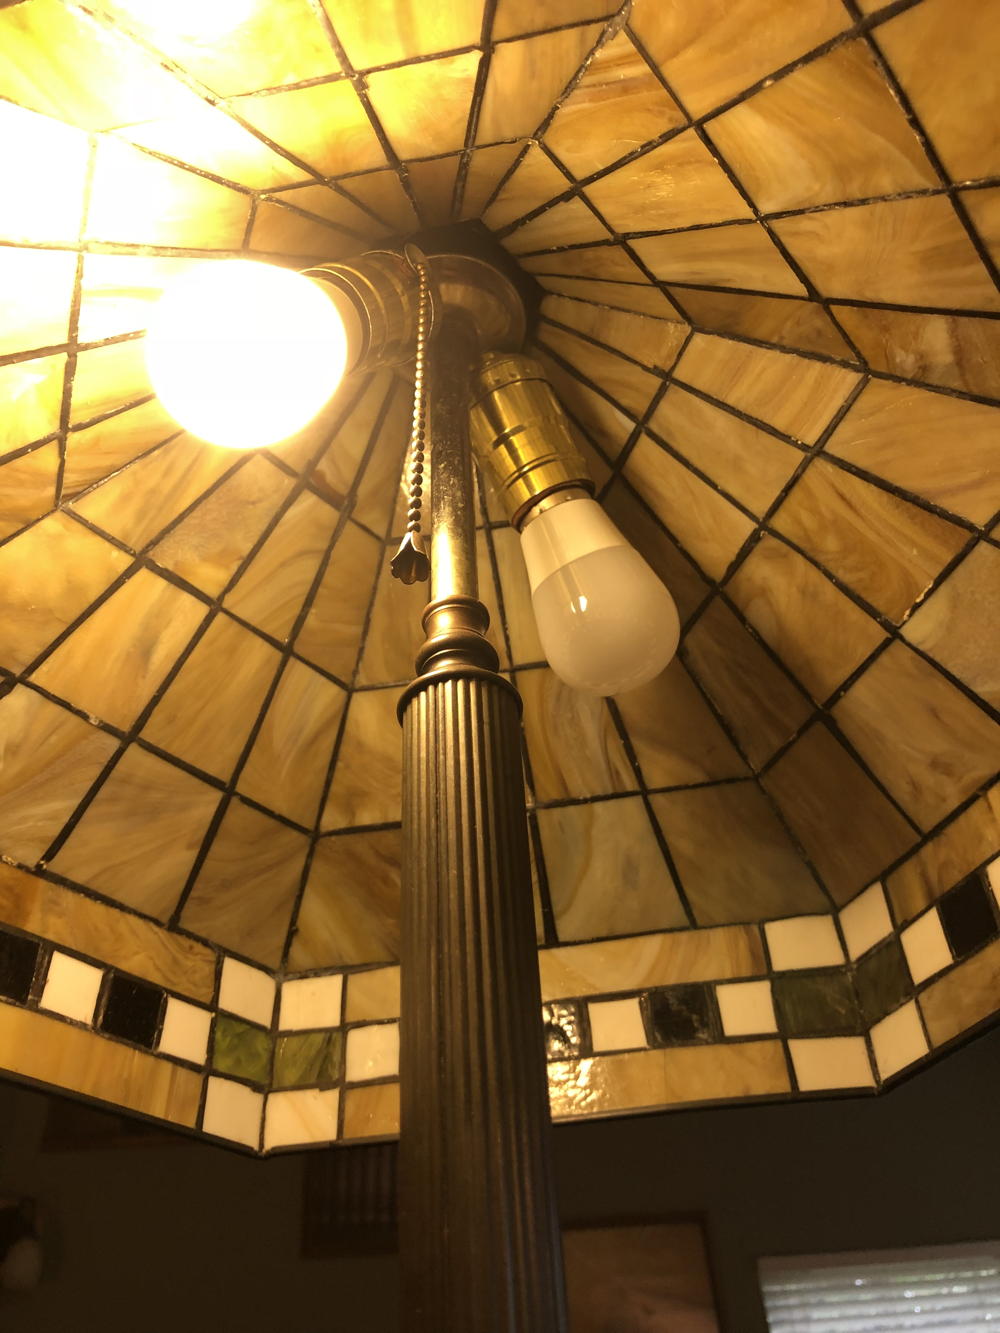 Bulbs inside lampshade